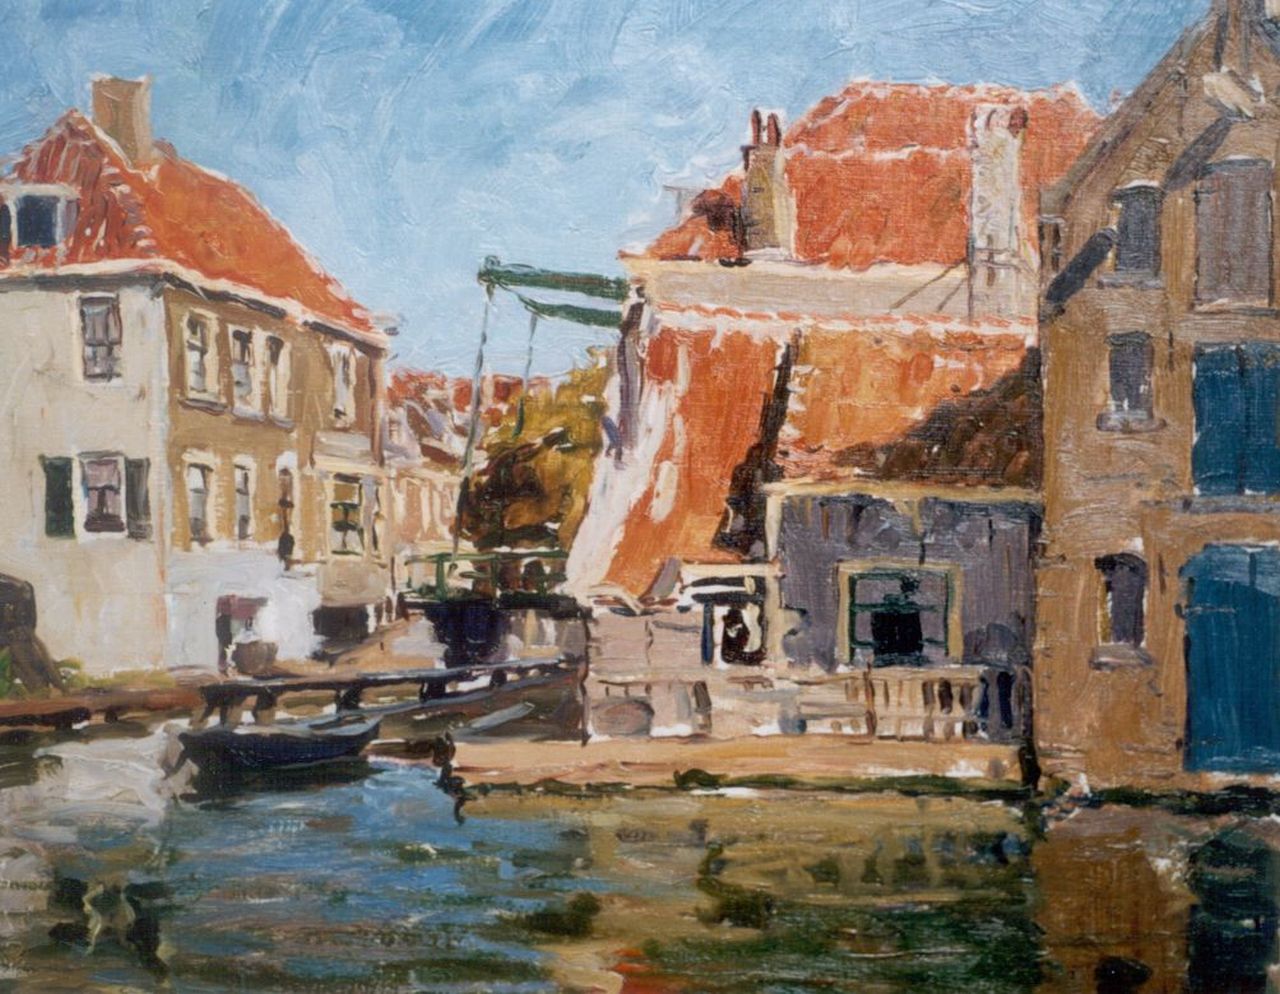 Dort W. van | Willem van Dort, A view of a Dutch town, Öl auf Leinwand 45,4 x 55,2 cm, signed l.r.